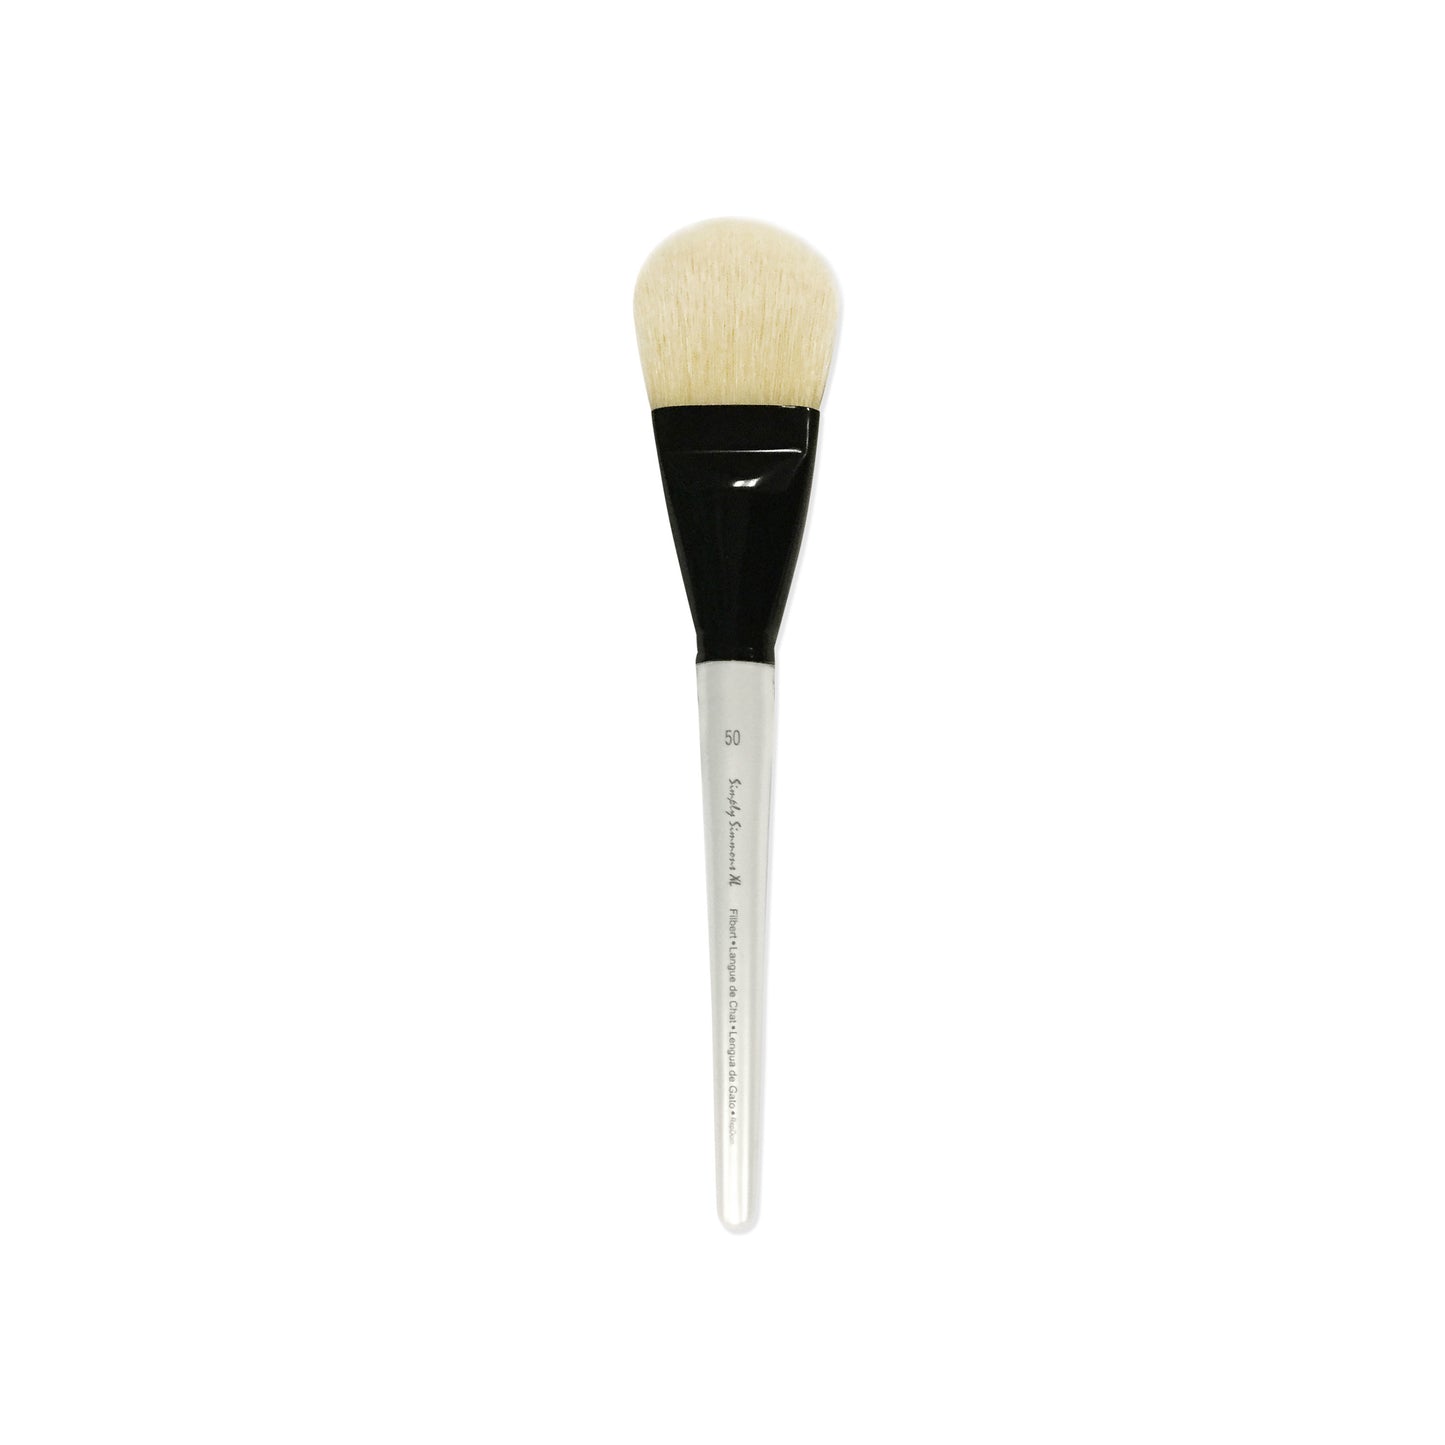 Simply Simmons XL Brushes - Filbert / #50 / Natural Bristle by Robert Simmons - K. A. Artist Shop